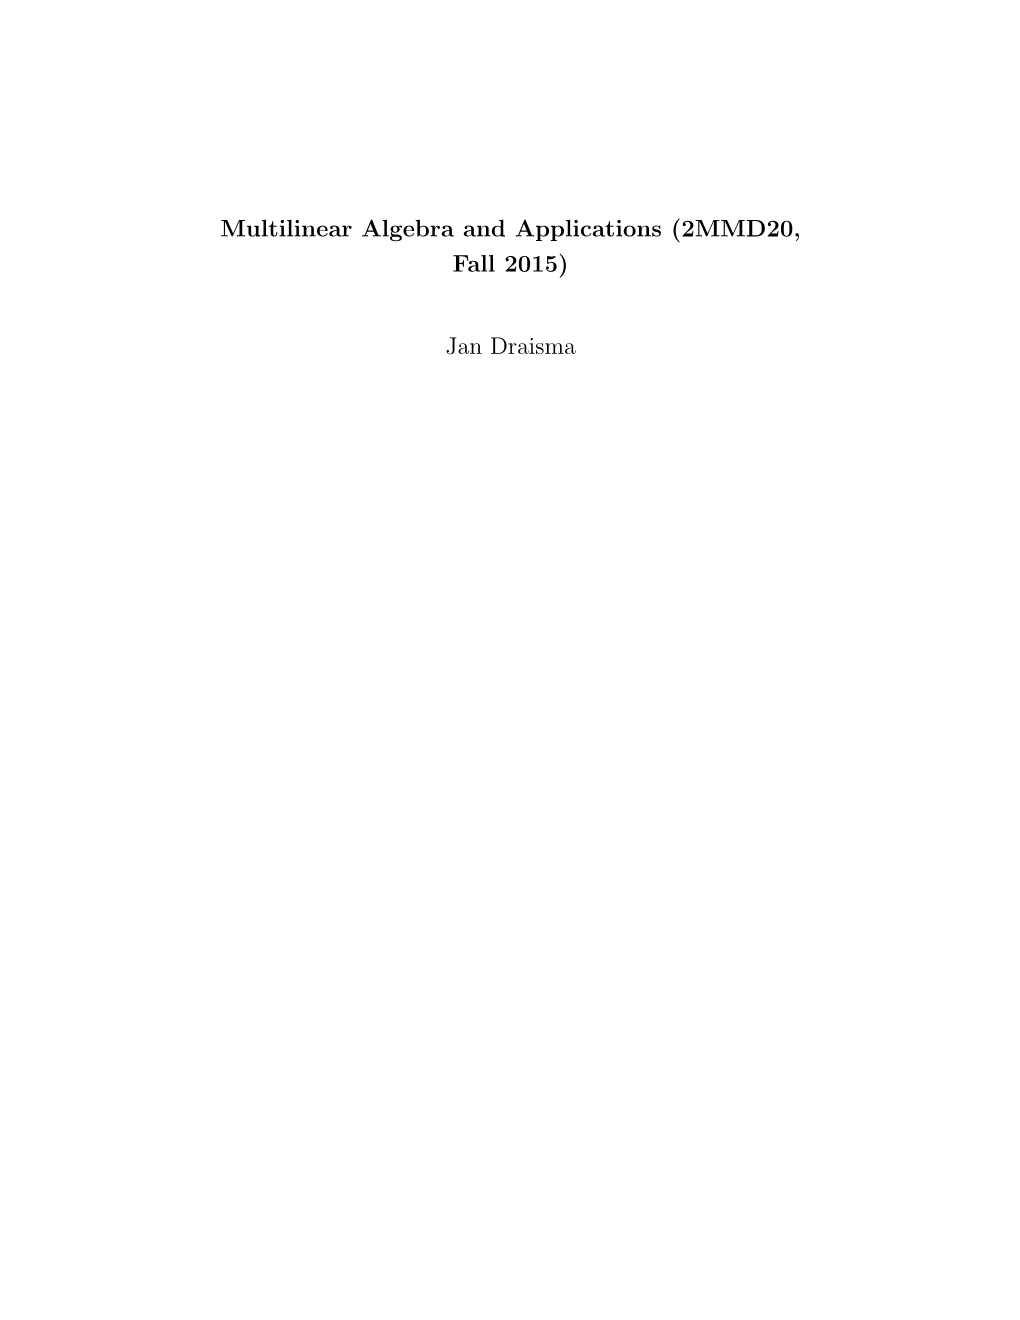 Multilinear Algebra and Applications (2MMD20, Fall 2015) Jan Draisma